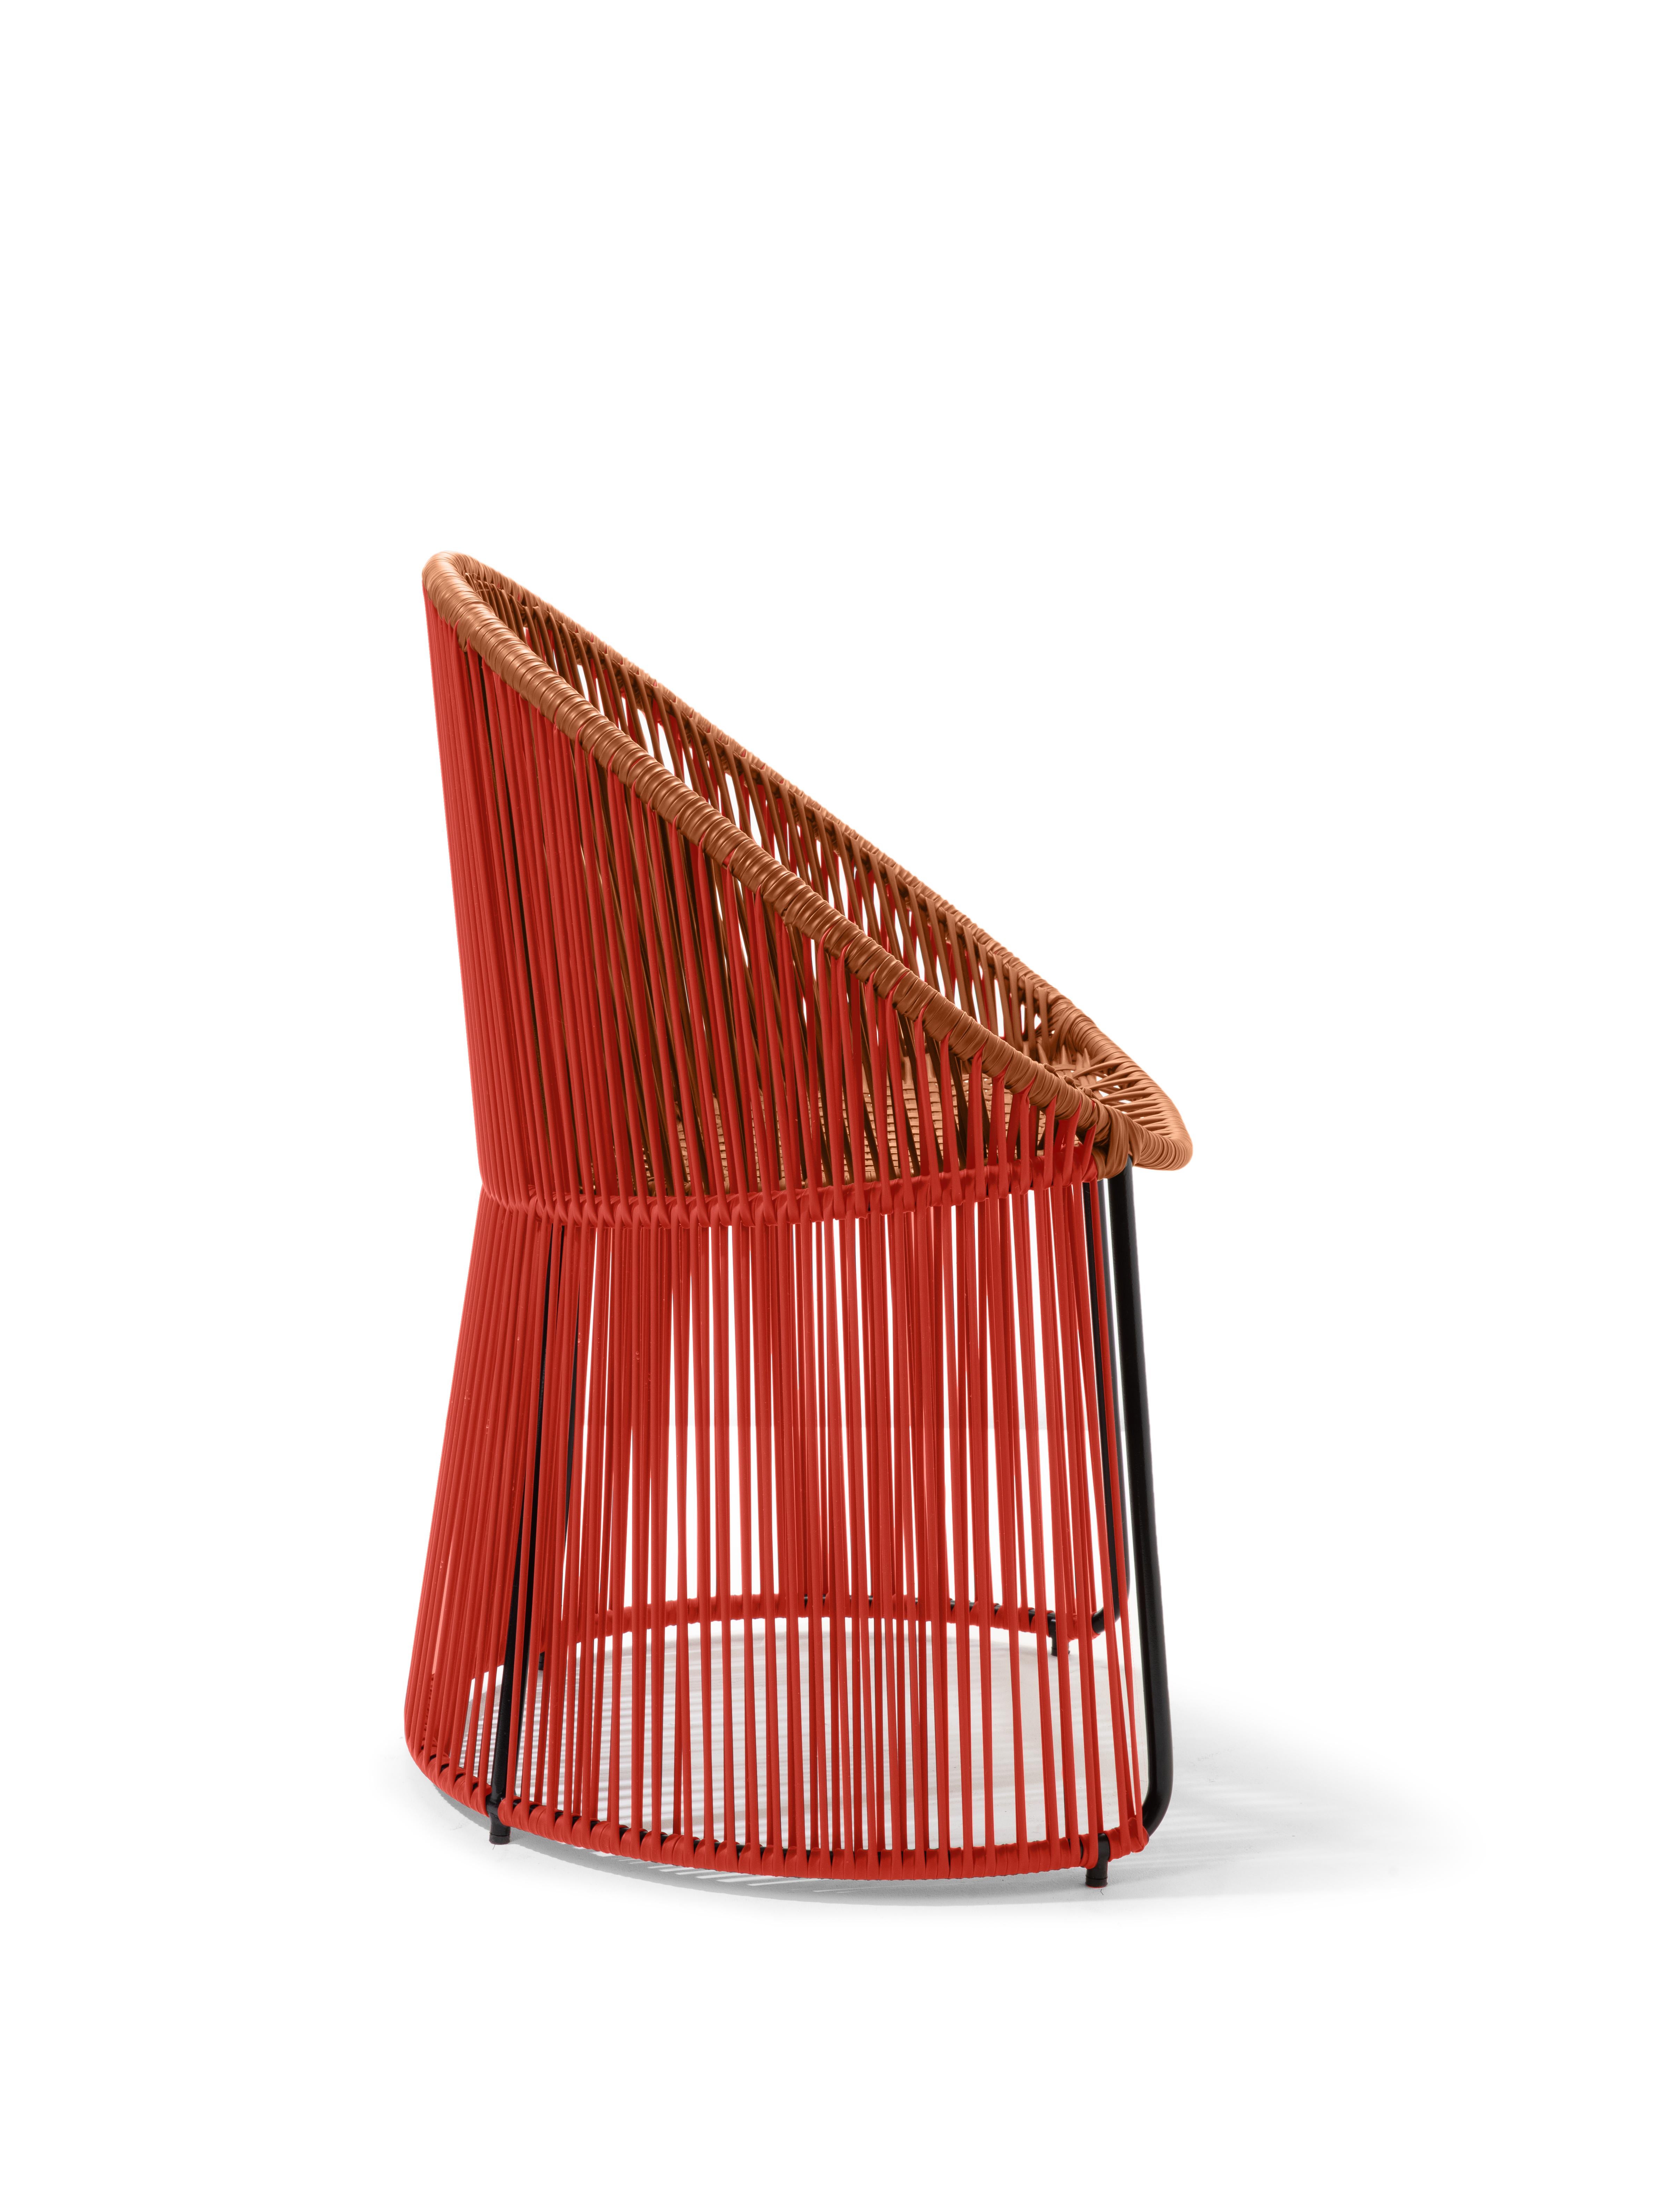 German Set of 2 Coral Cartagenas Dining Chair by Sebastian Herkner For Sale